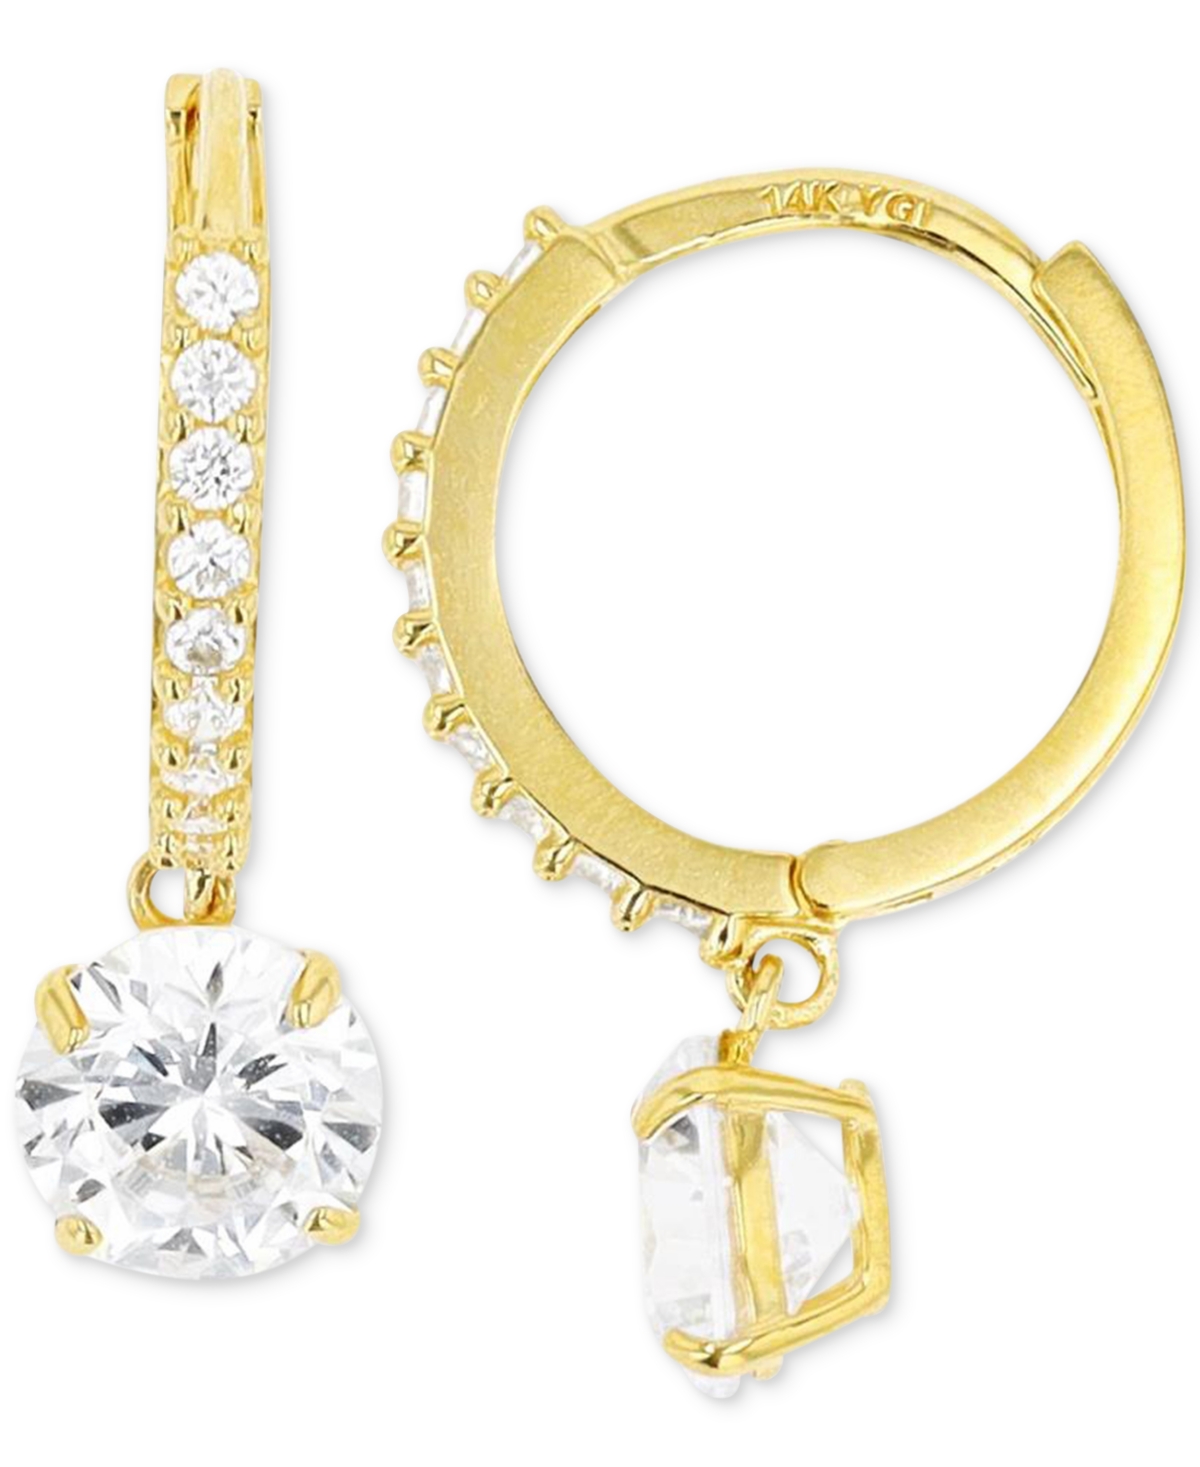 Cubic Zirconia Dangle Hoop Drop Earrings in 14K Gold-Plated Sterling Silver - Gold